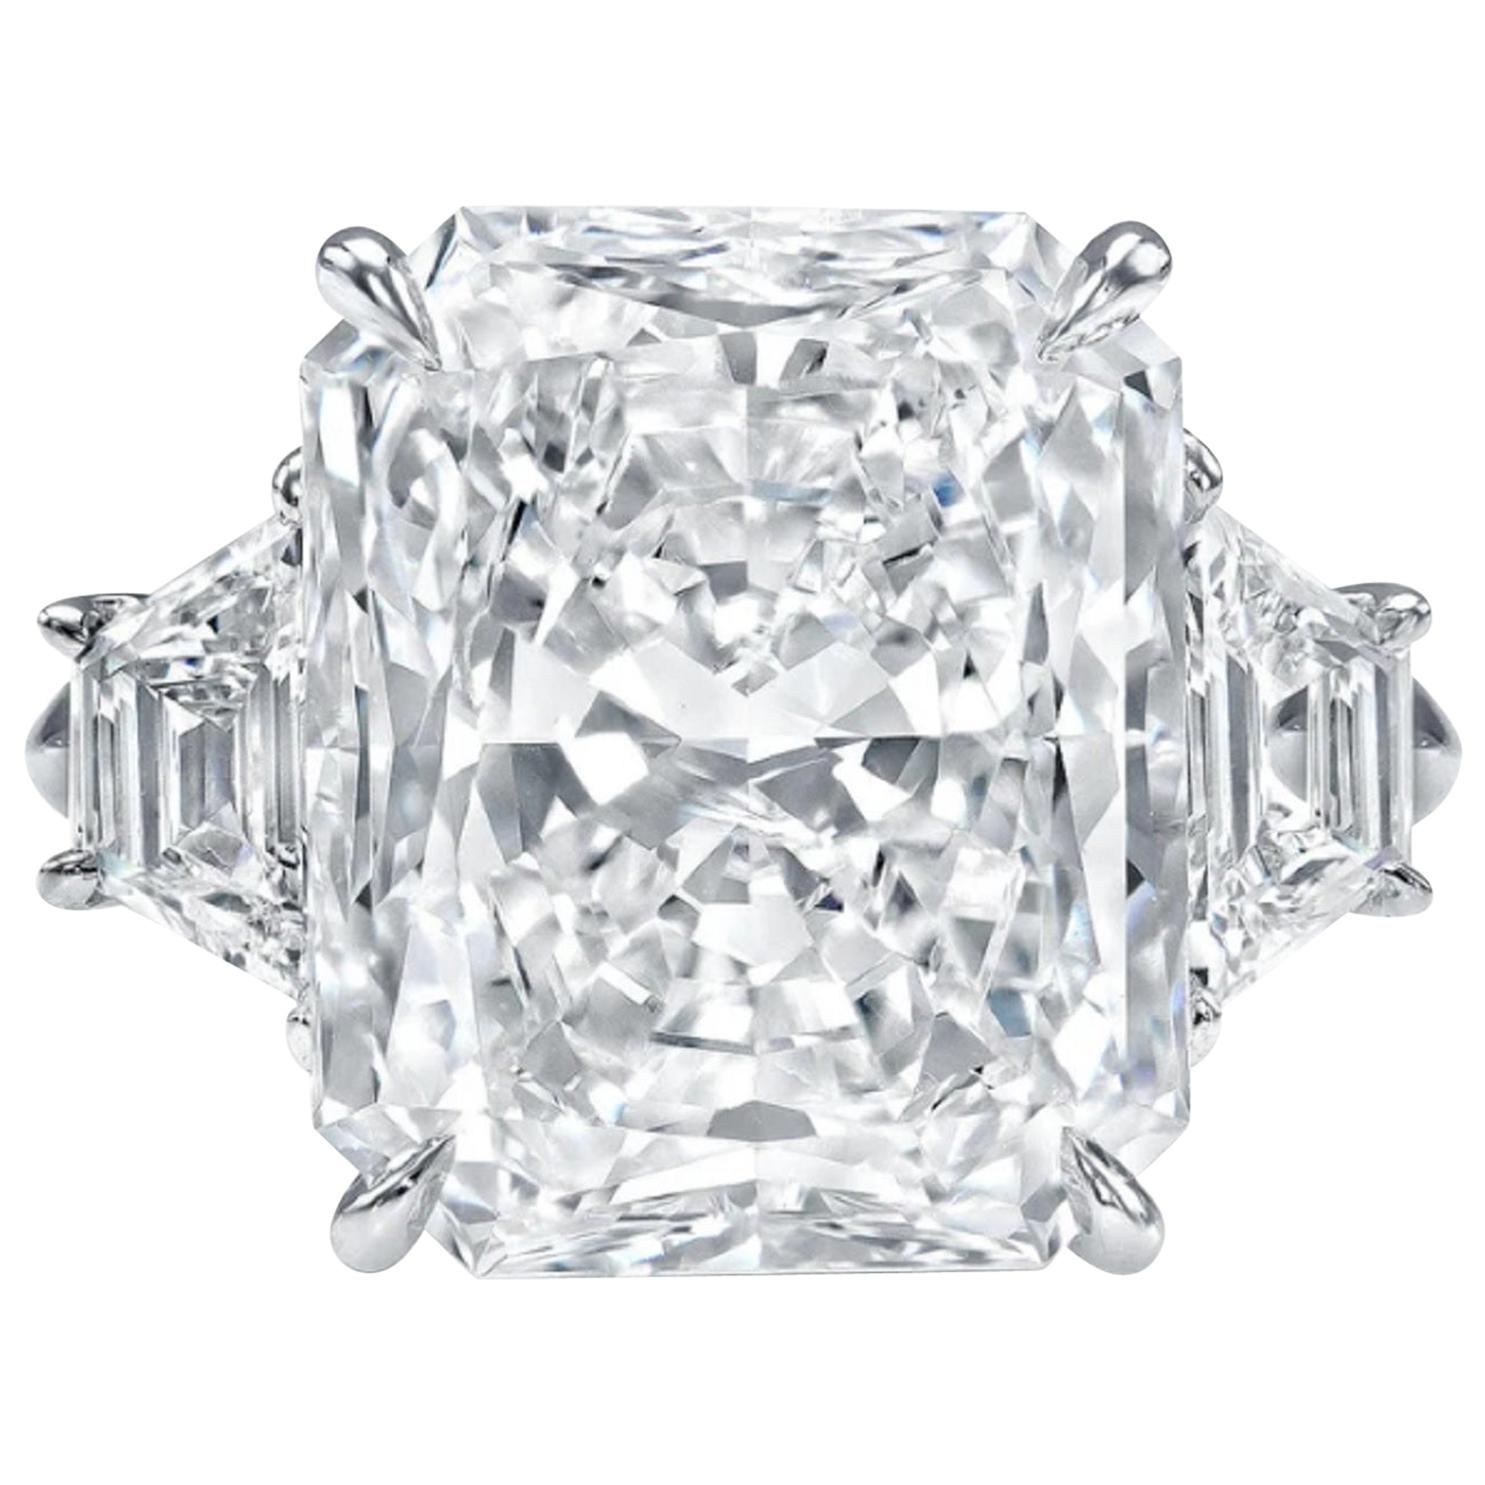 GIA Certified 4 Carat Radiant Cut Diamond Ring VVS2 Clarity H Color Triple Ex